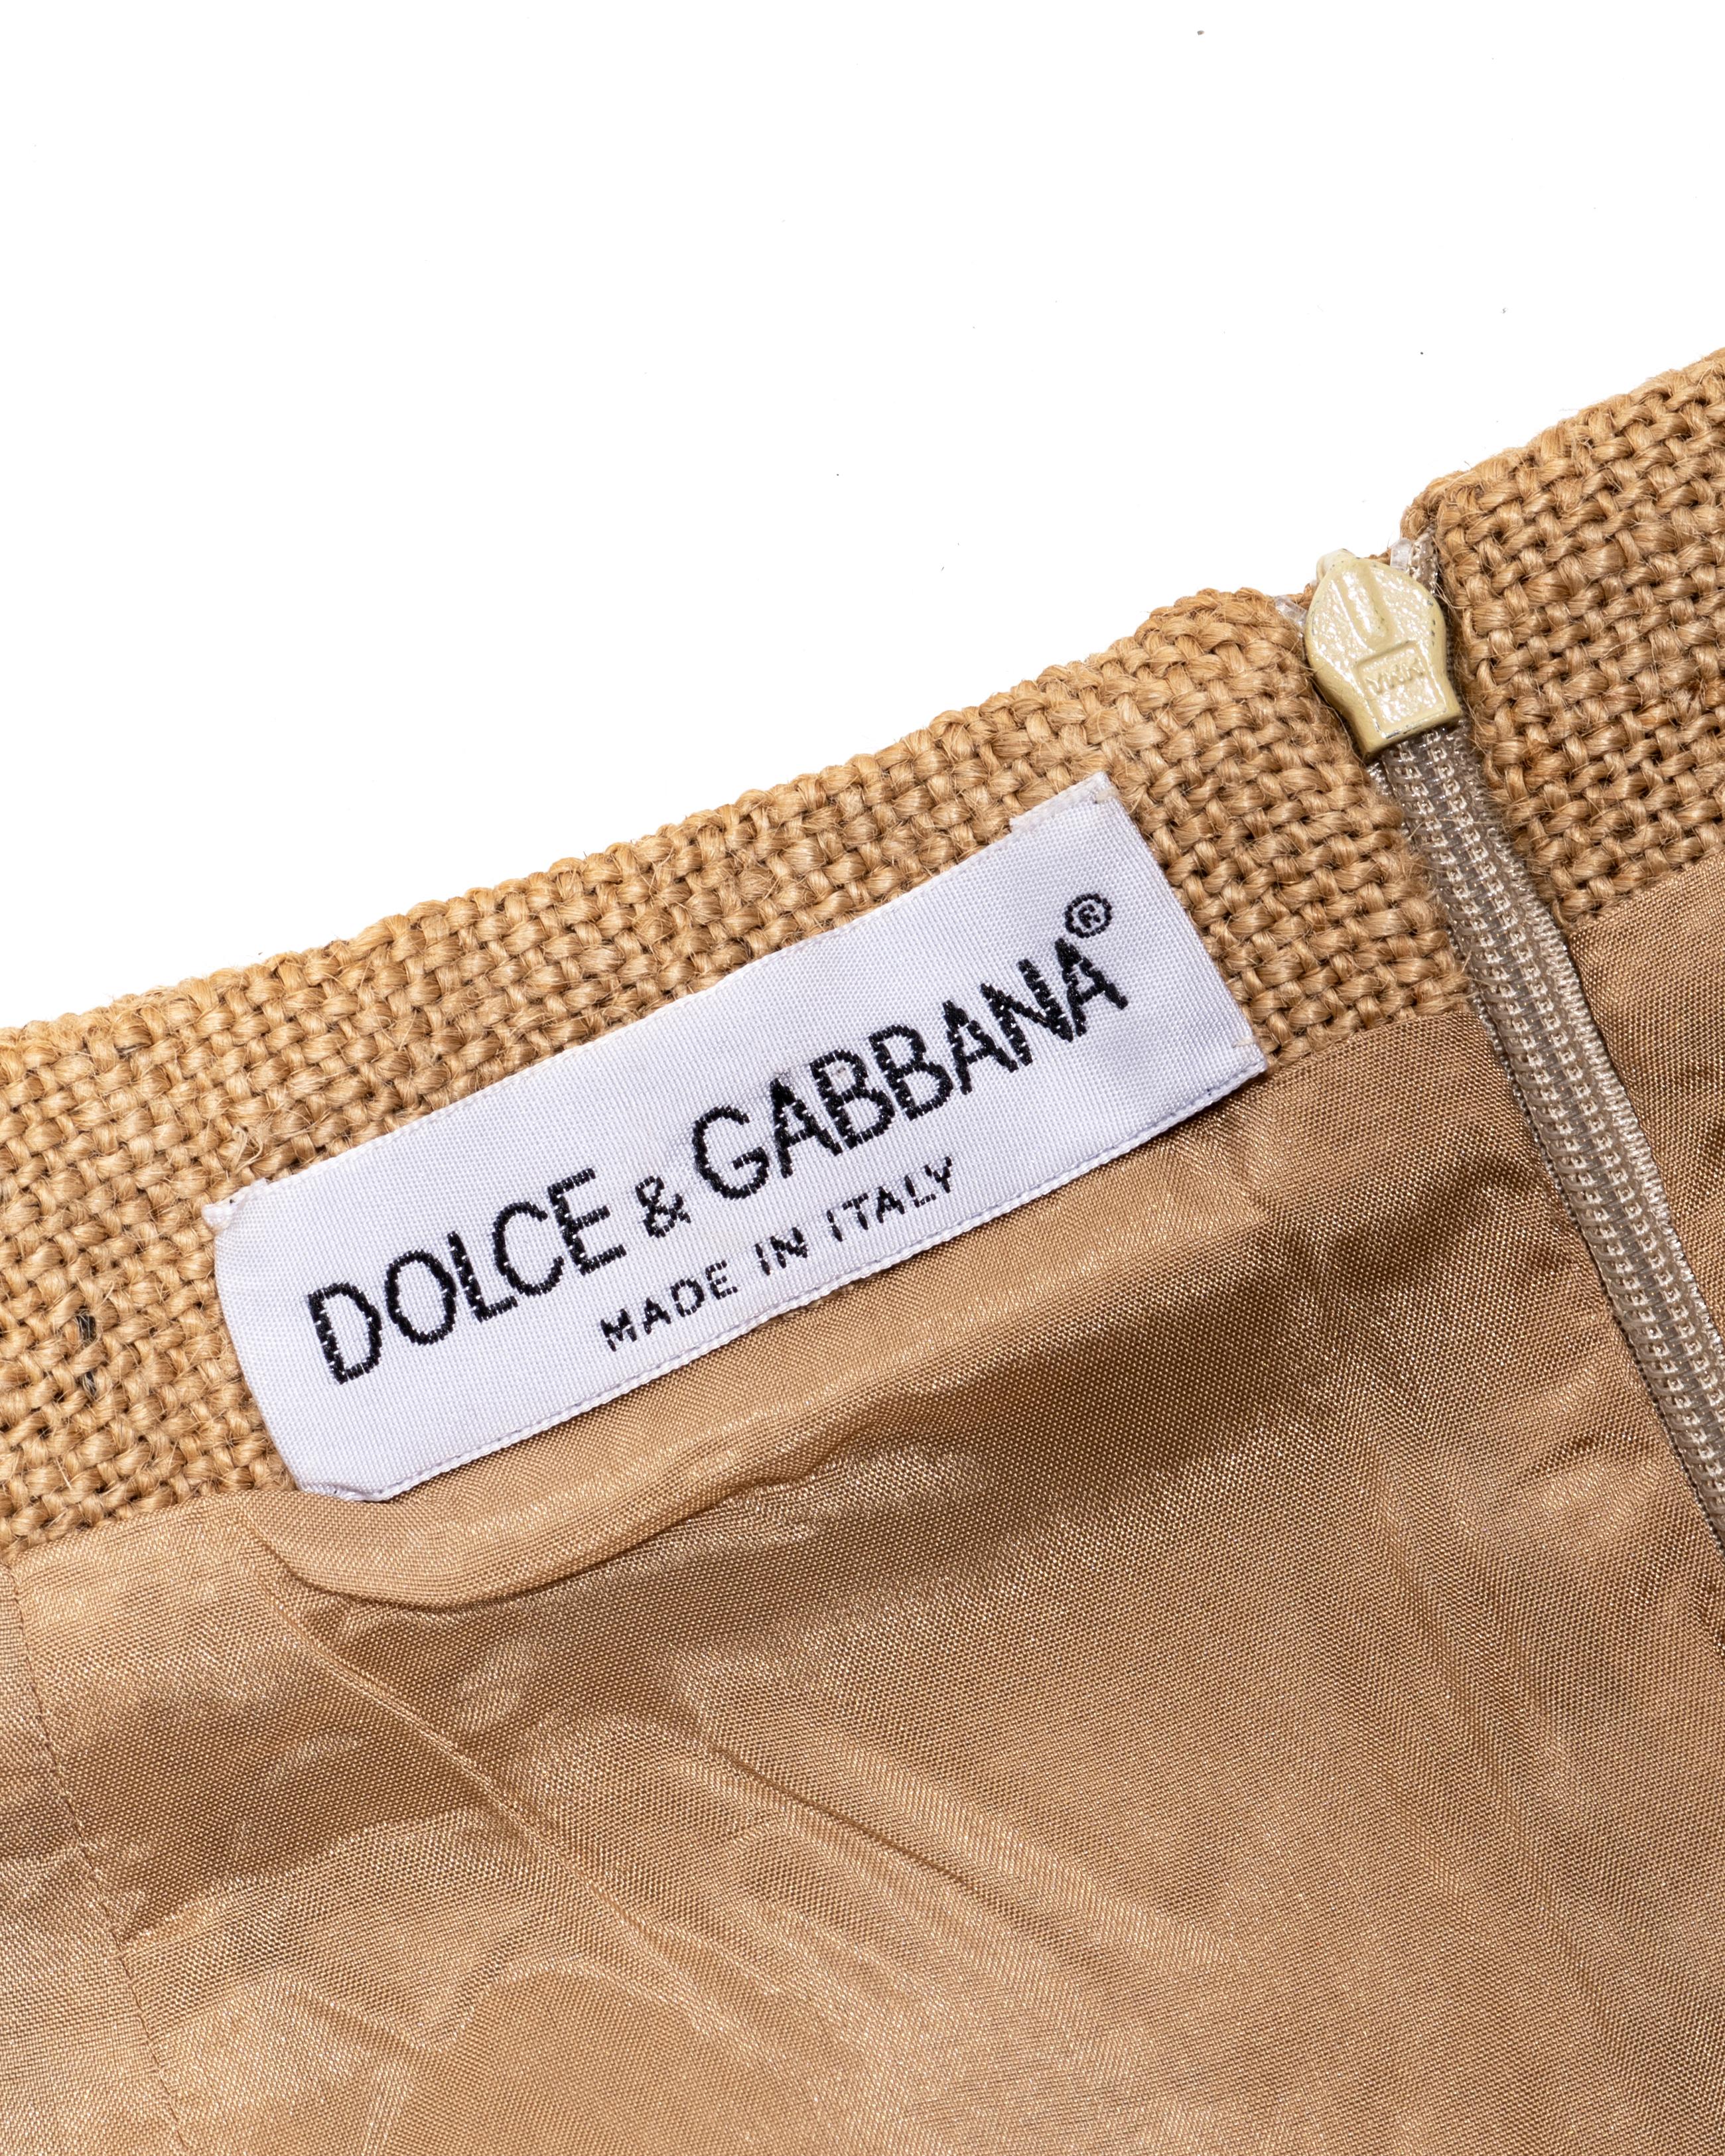 Dolce & Gabbana jute hand-painted 'Sugar Baby' mini skirt, ss 1992 For Sale 3